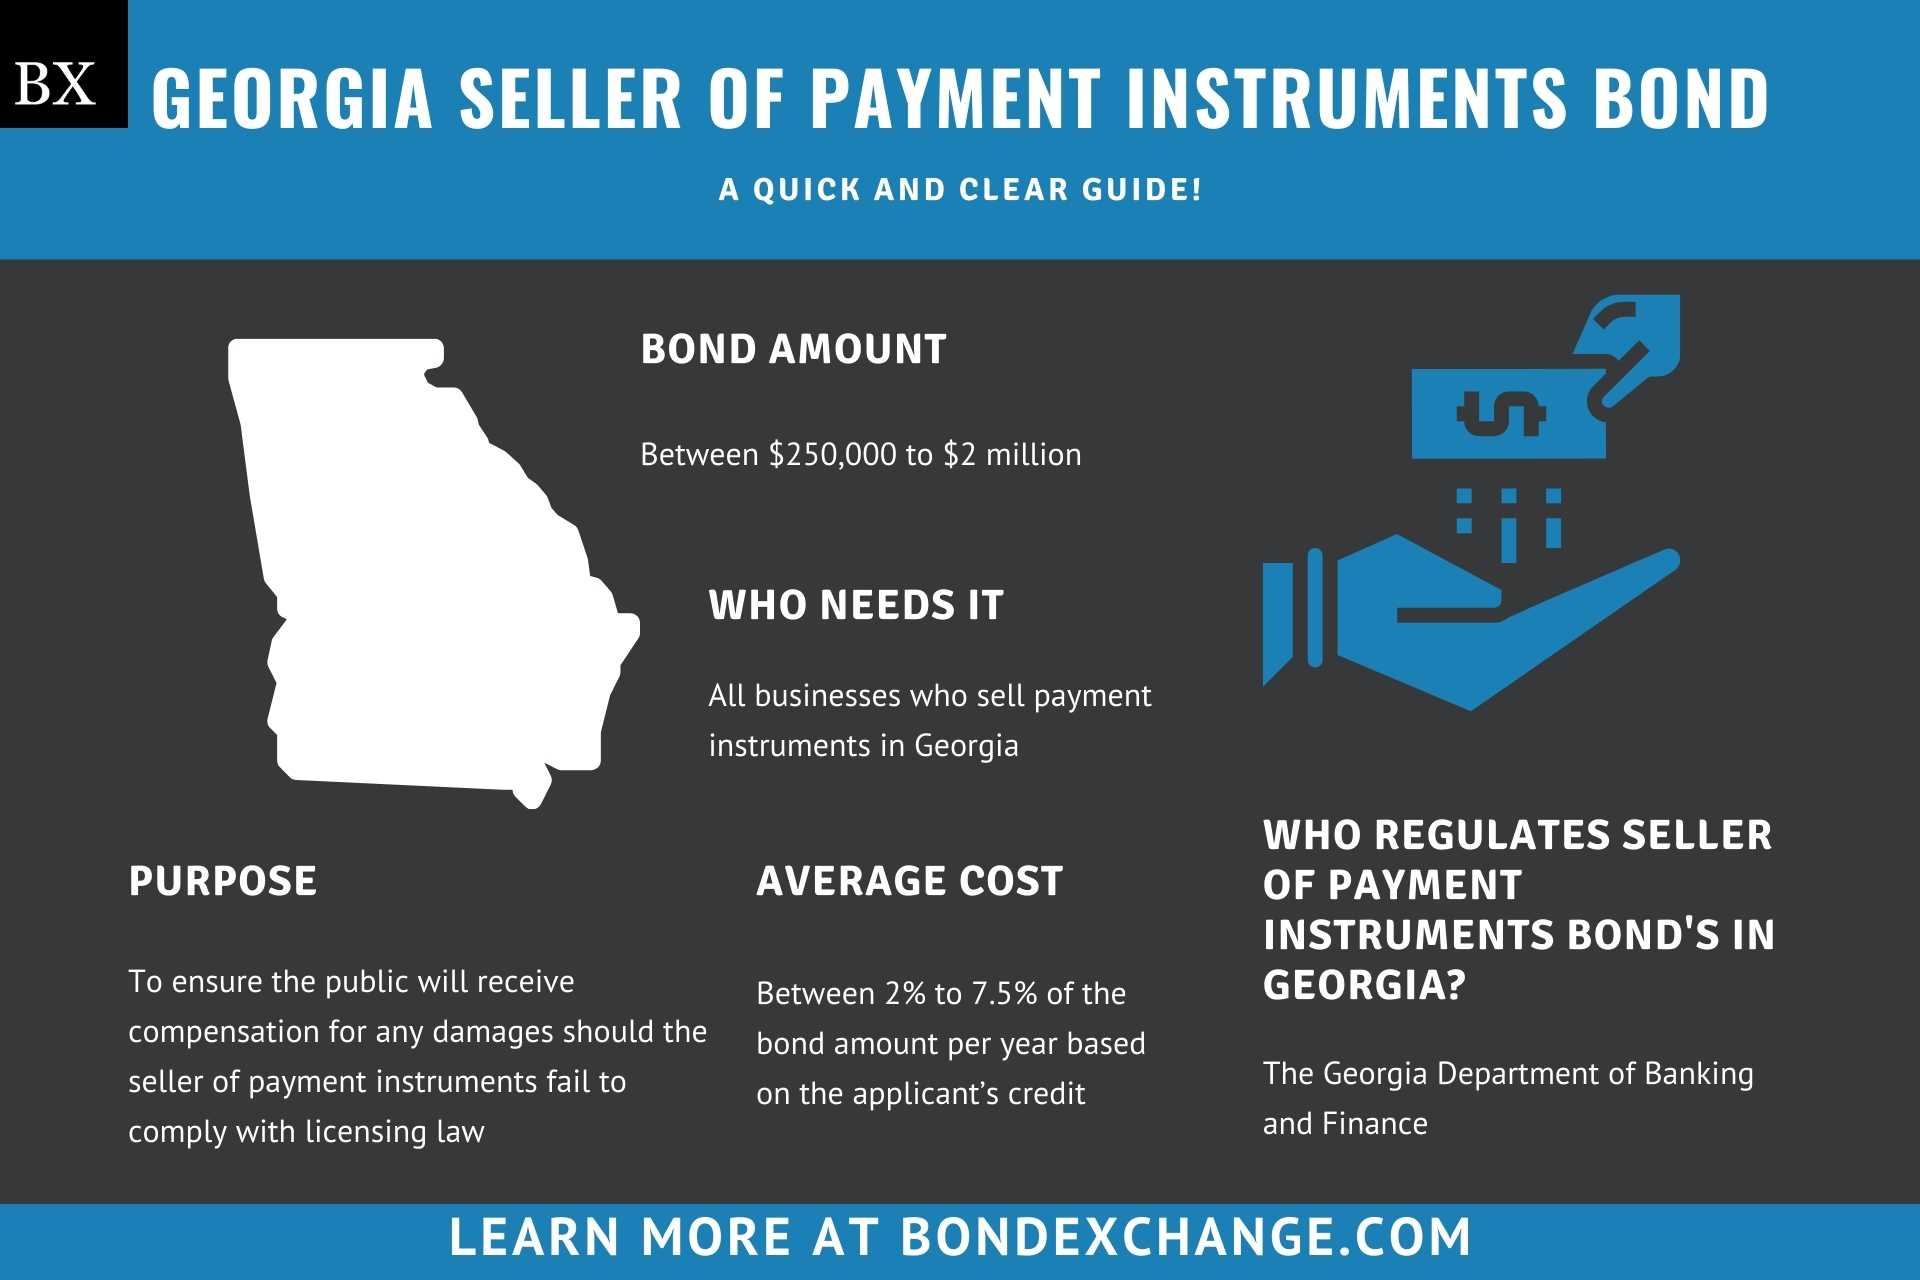 Georgia Seller of Payment Instruments Bond